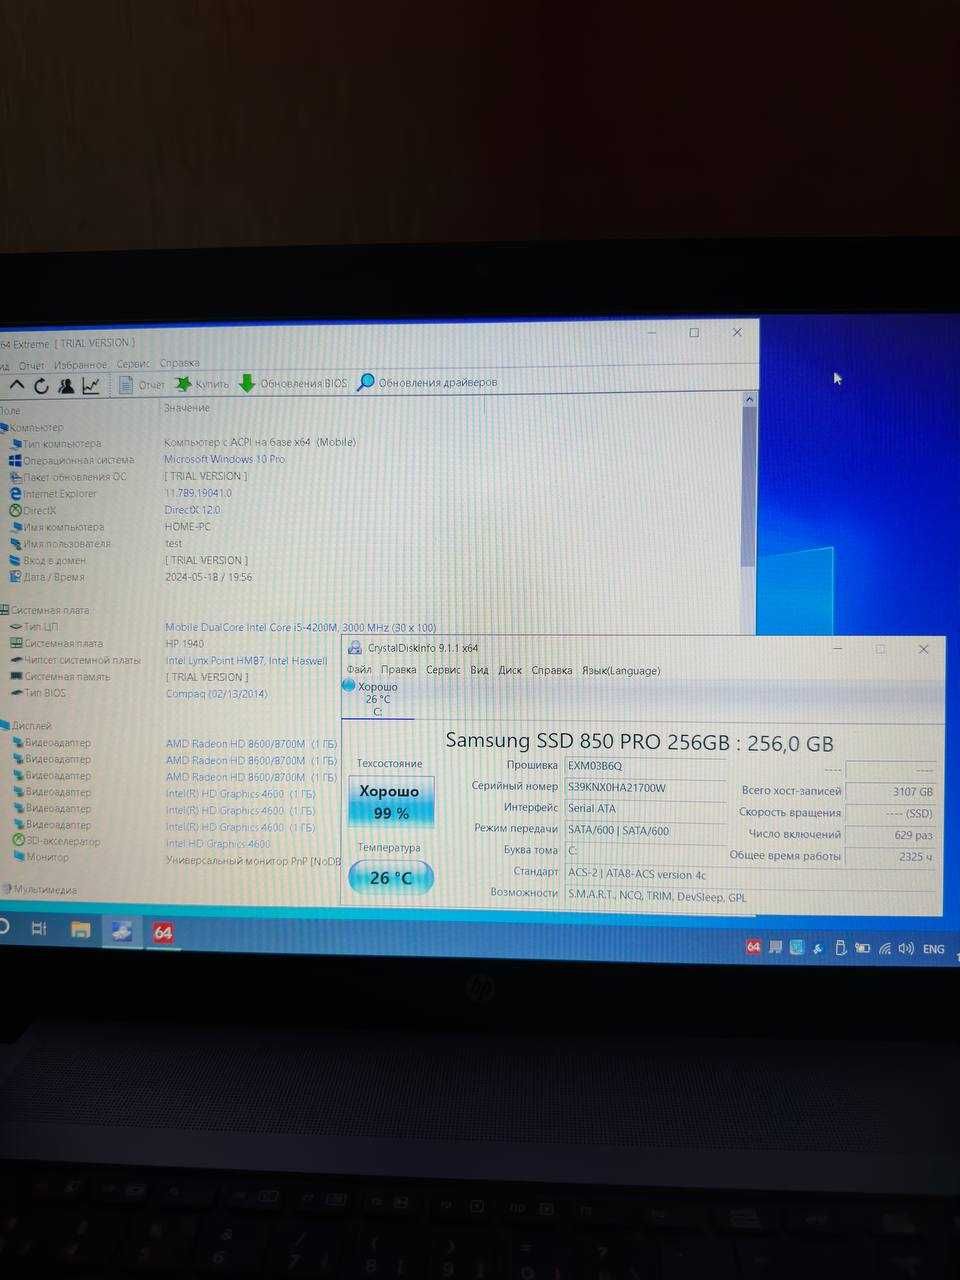 Ноутбук HP 17.3", i5-4200M, 4GB RAM, SSD 240GB